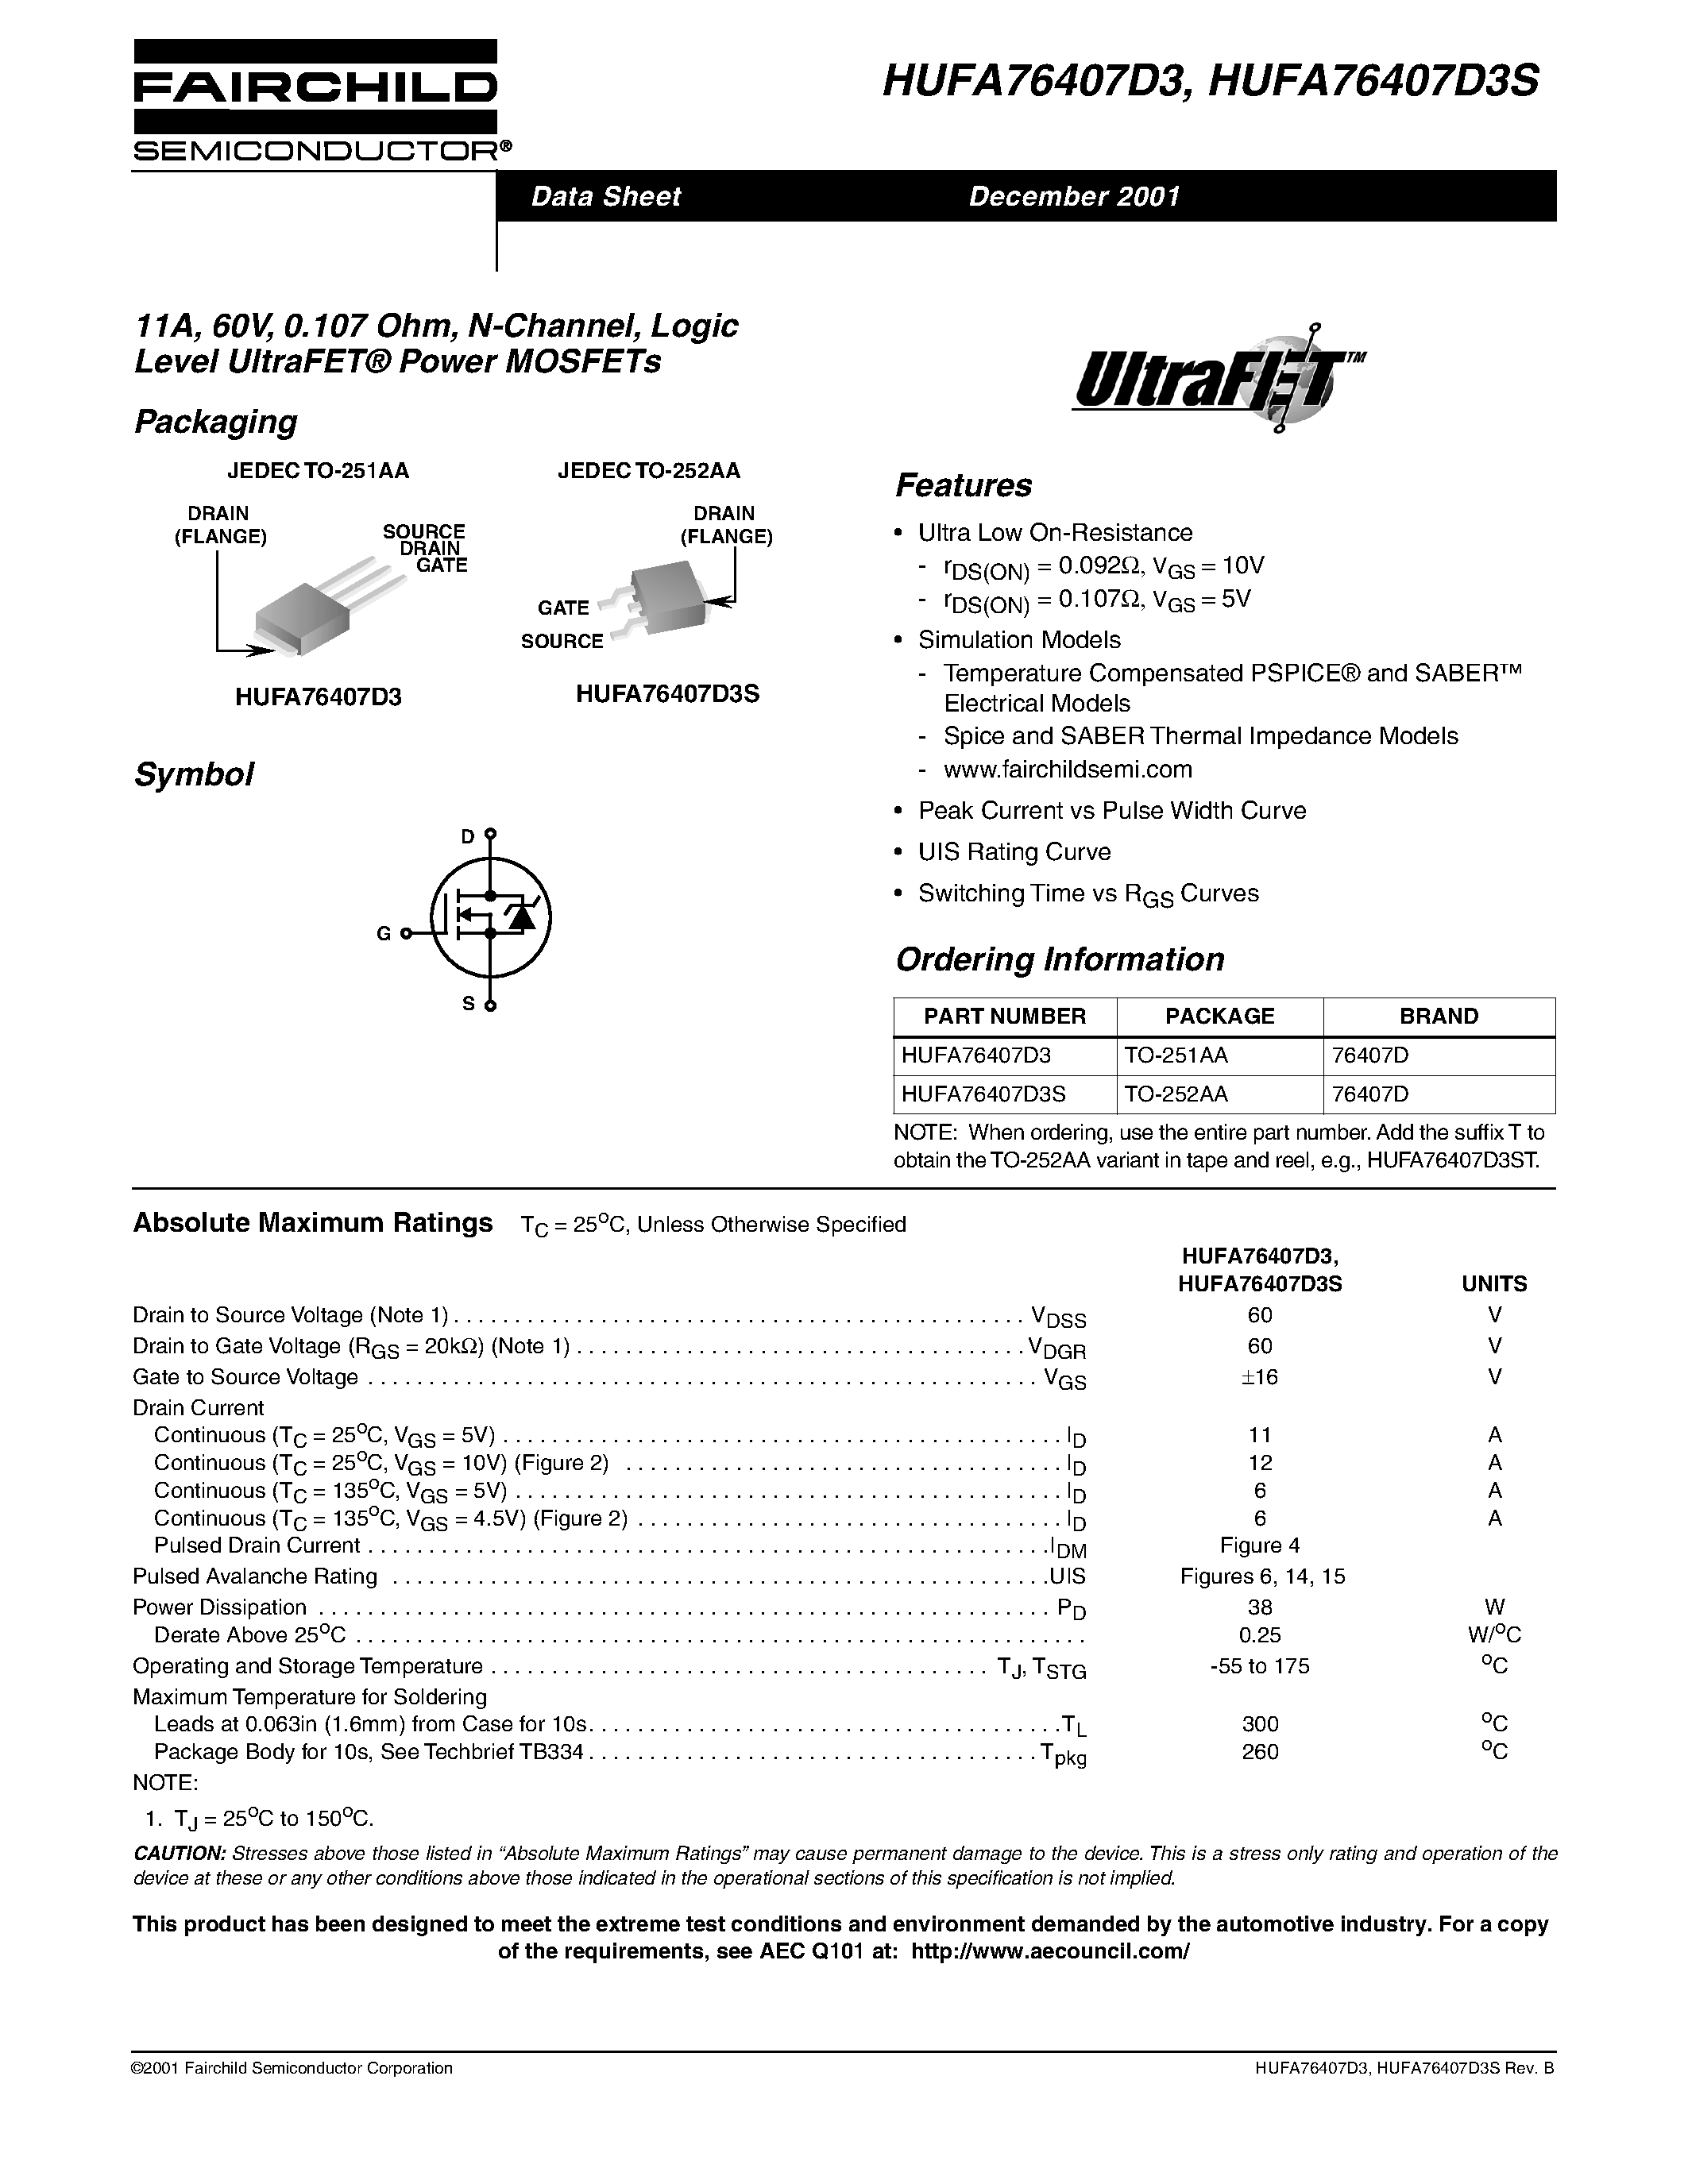 Даташит HUFA76407D3S - 11A/ 60V/ 0.107 Ohm/ N-Channel/ Logic Level UltraFET Power MOSFETs страница 1